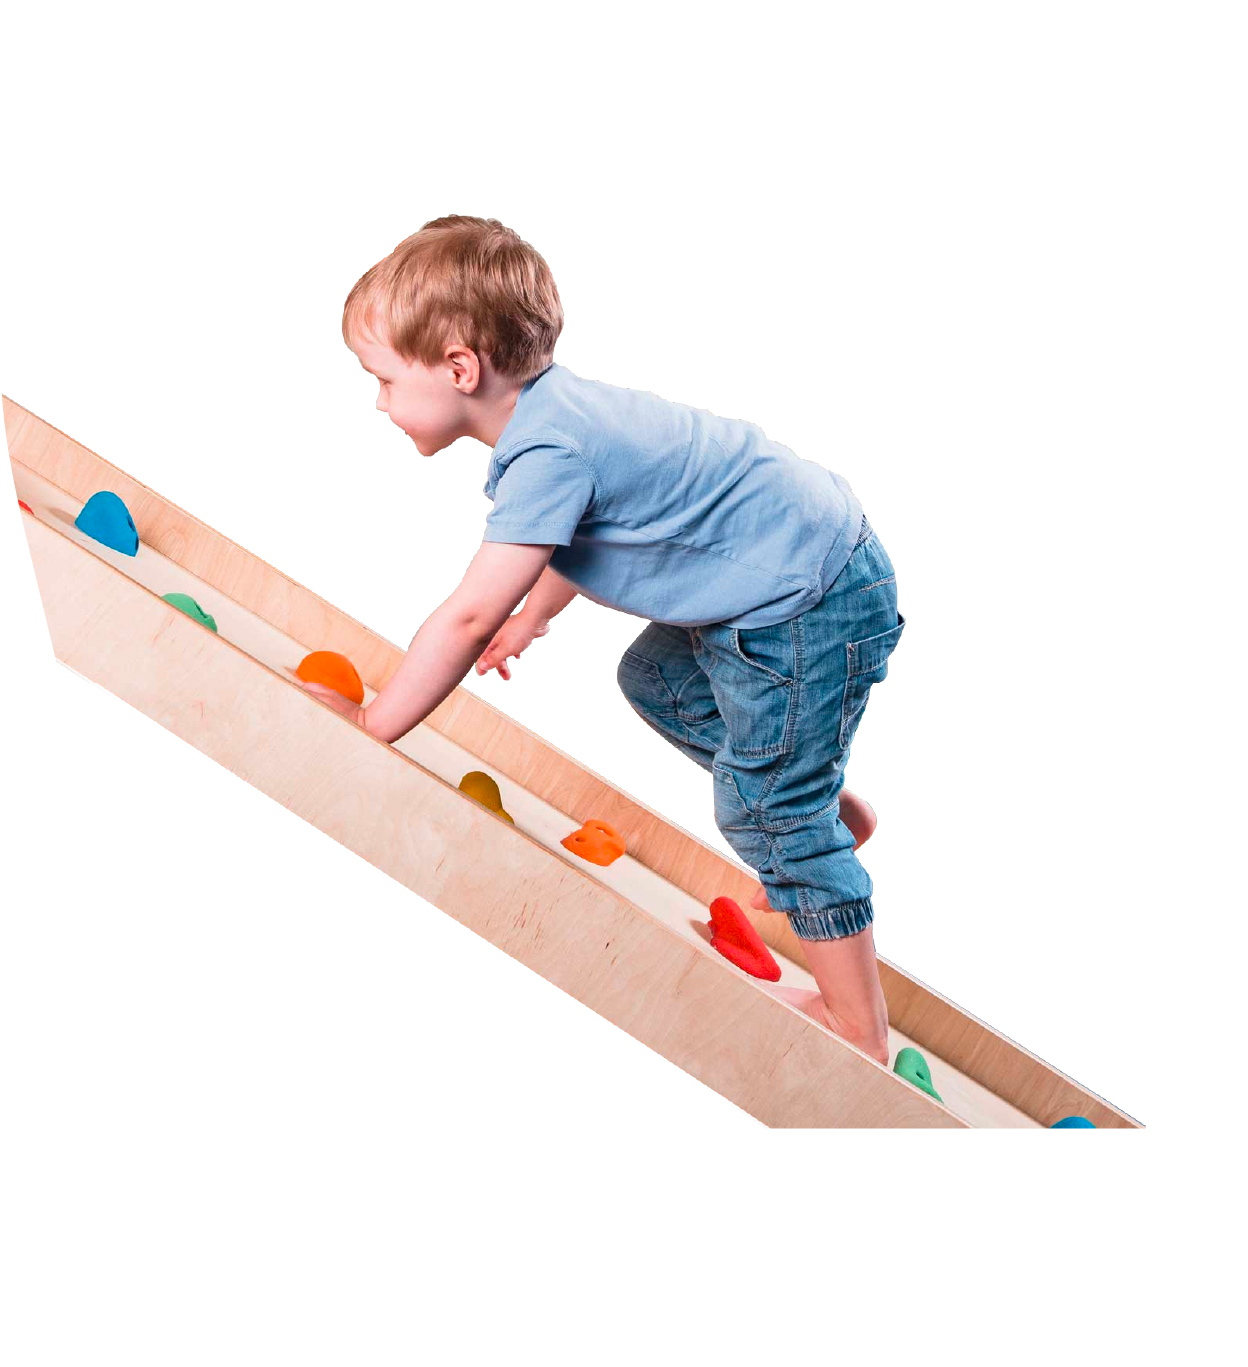 young boy playing on a climbing ramp